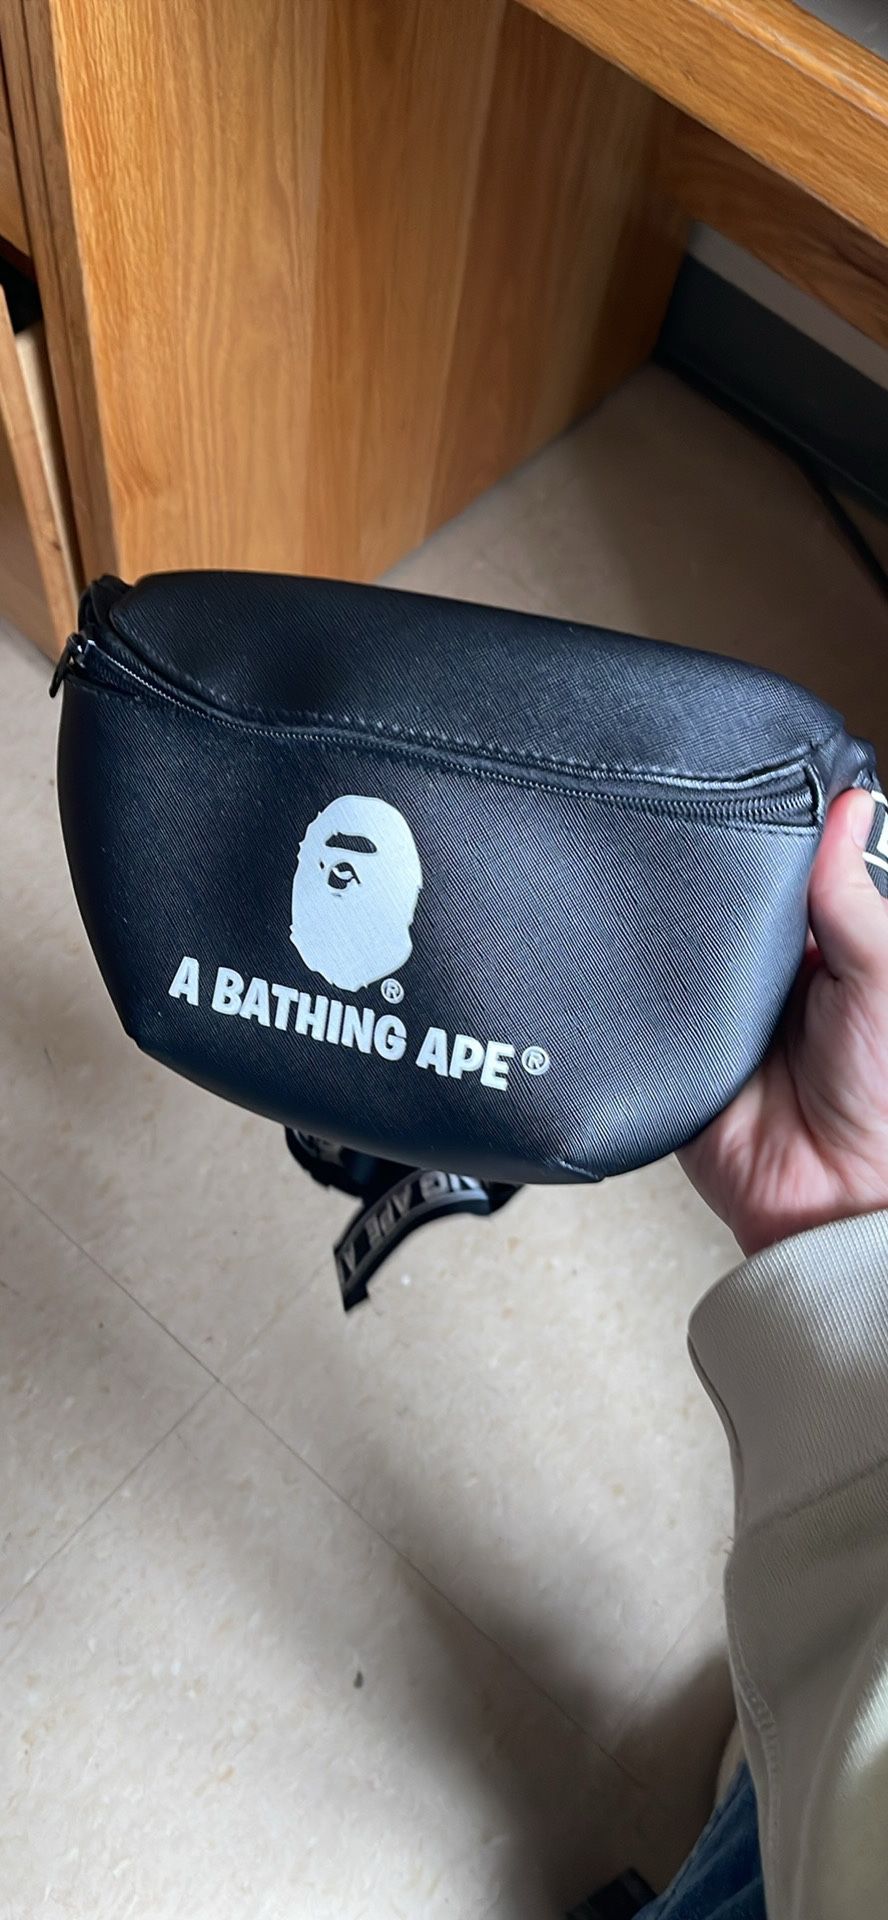 BAPE A Bathing Ape Waist Bag